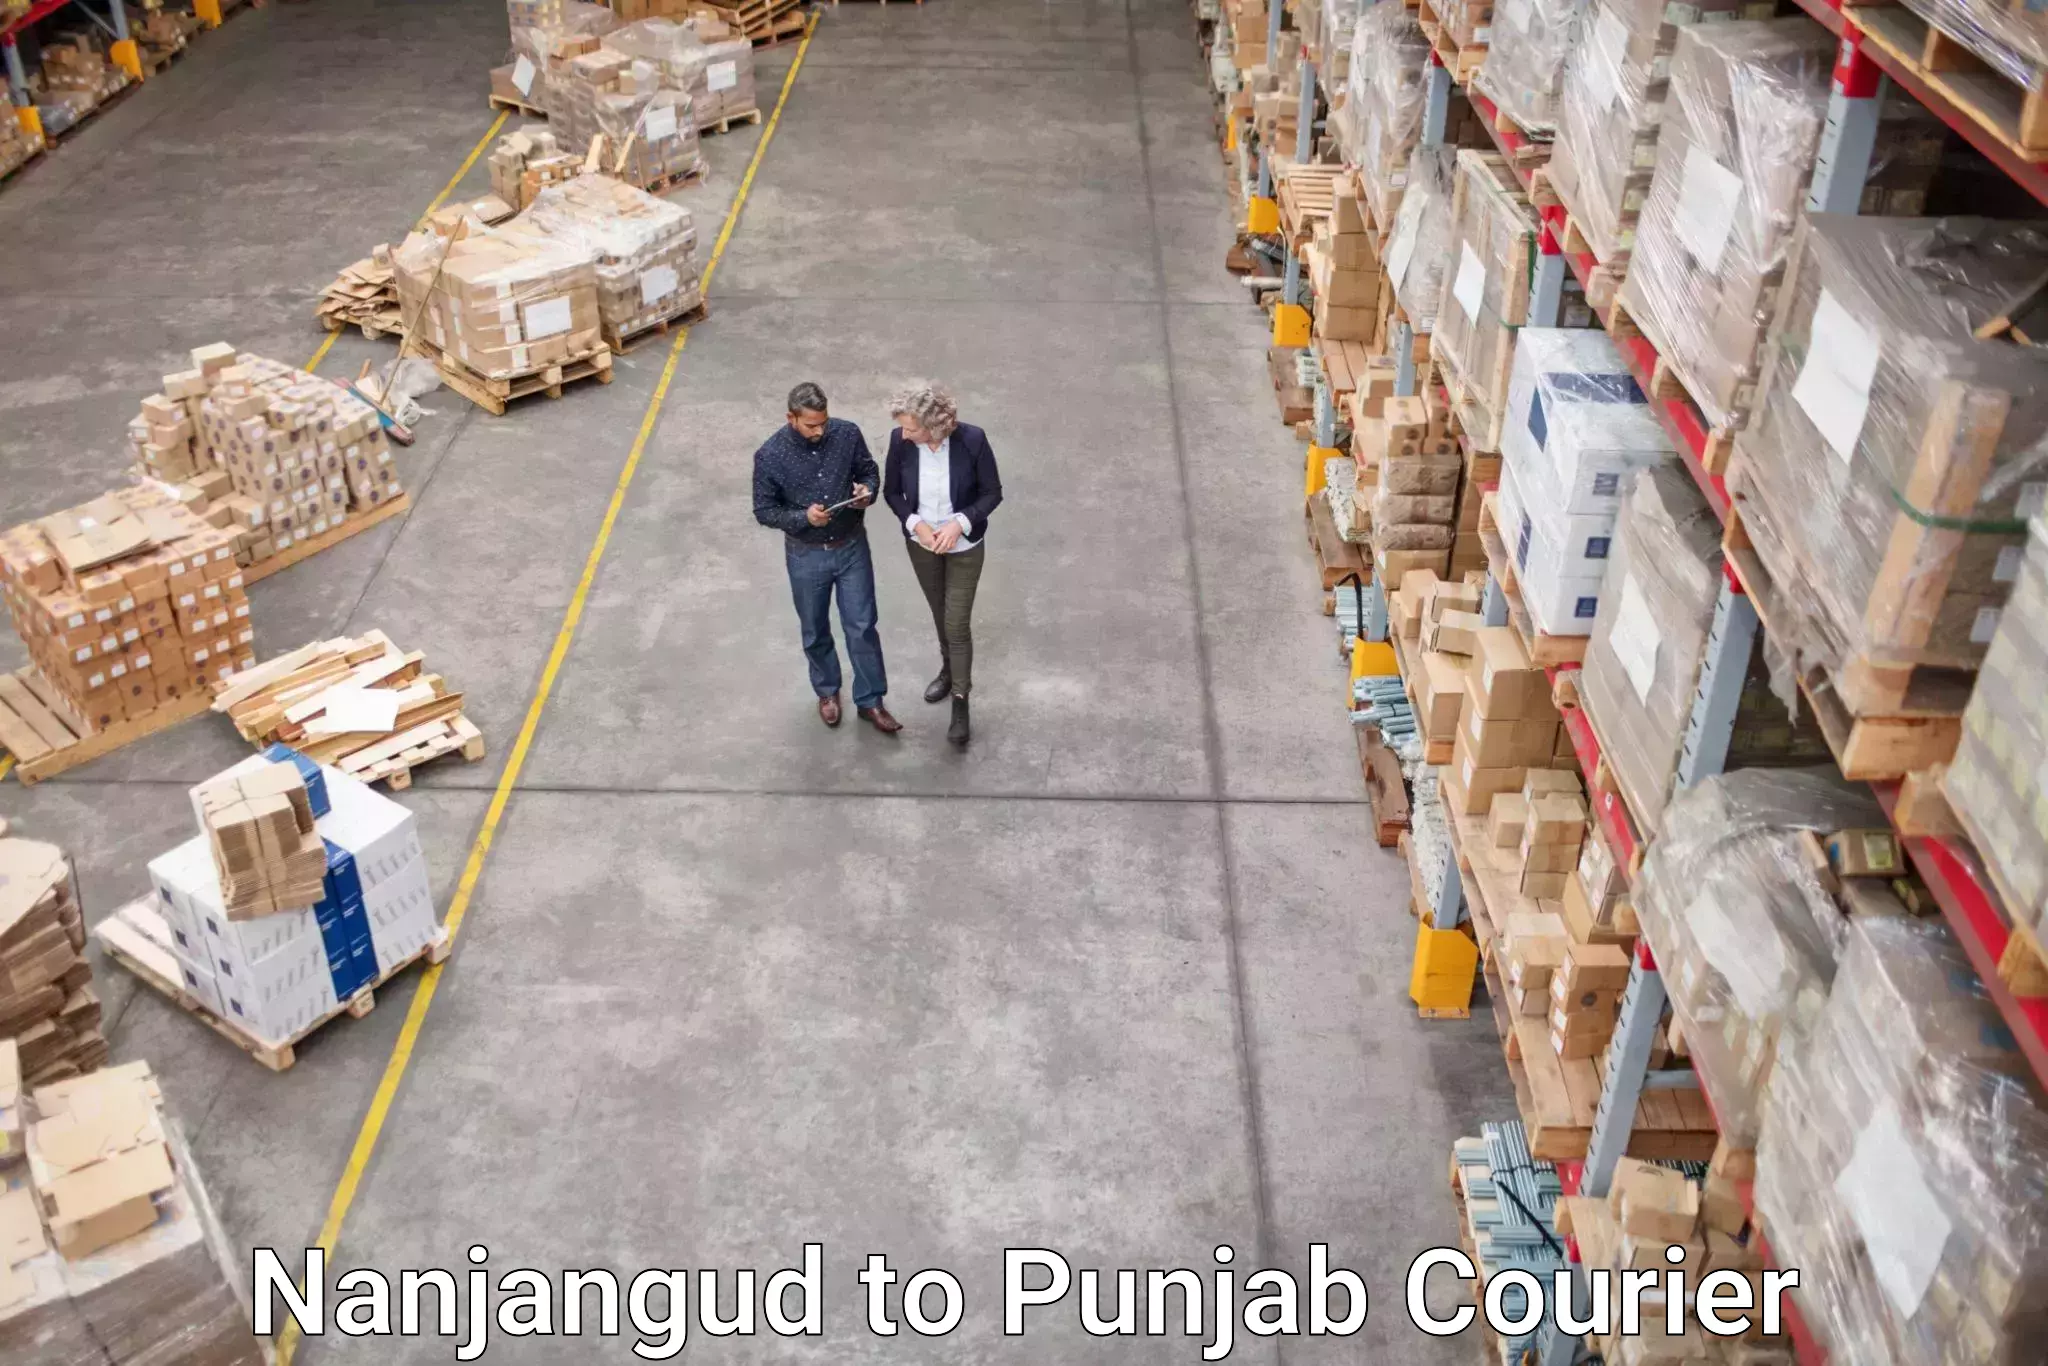 Courier service innovation Nanjangud to Rajpura